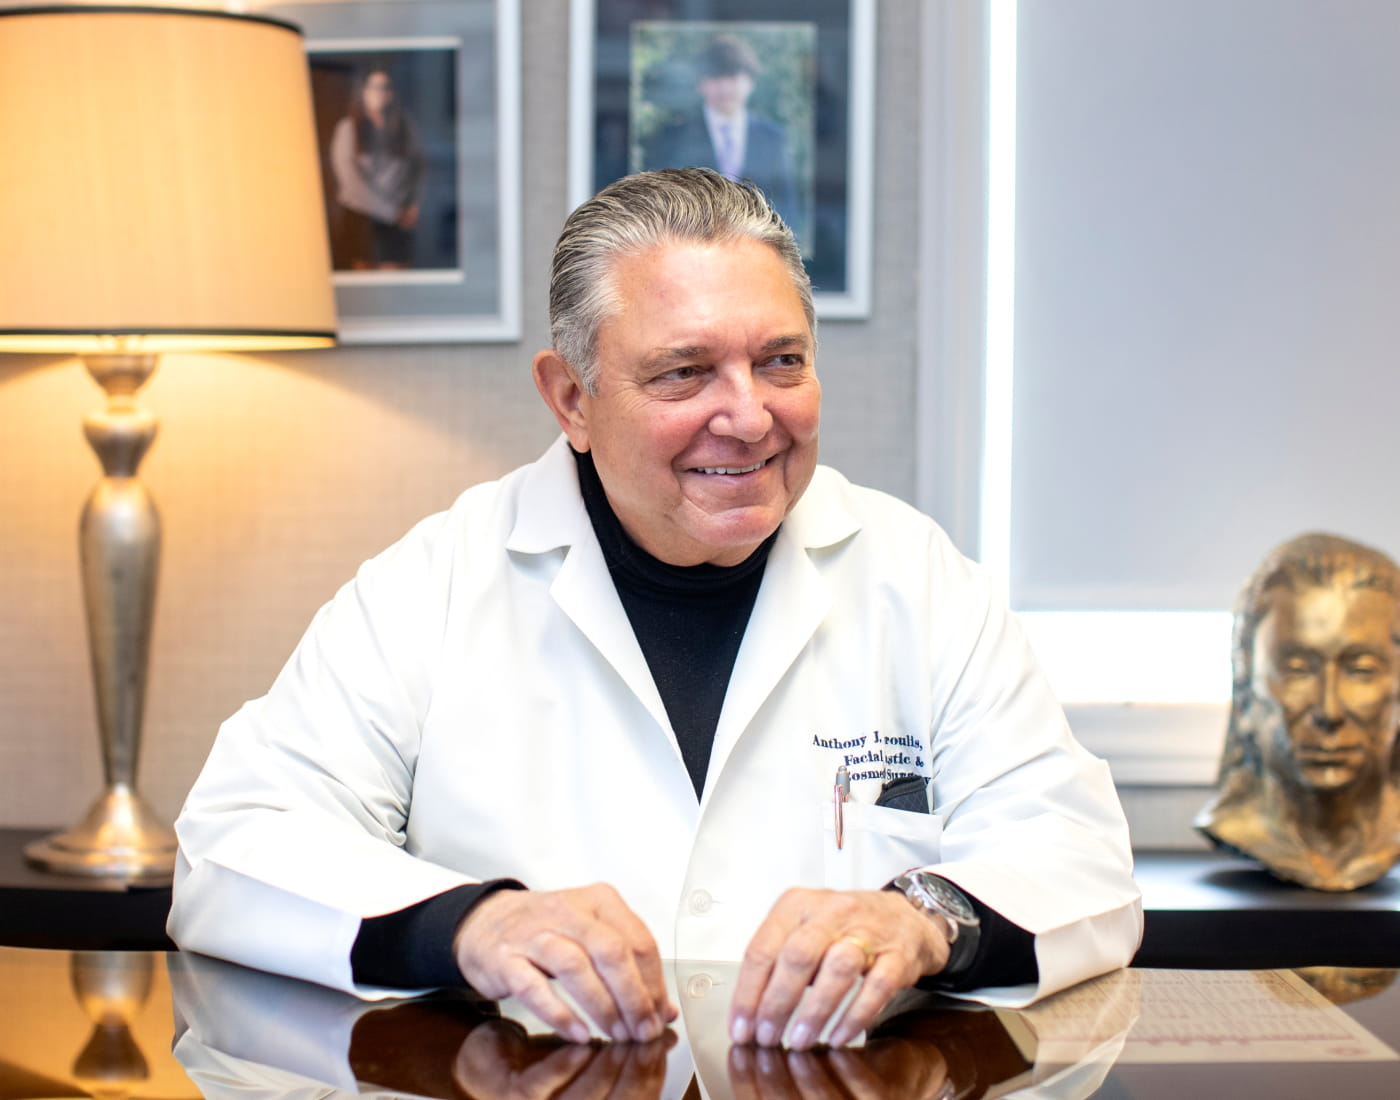 Northfield plastic surgeon, Dr. Anthony Geroulis